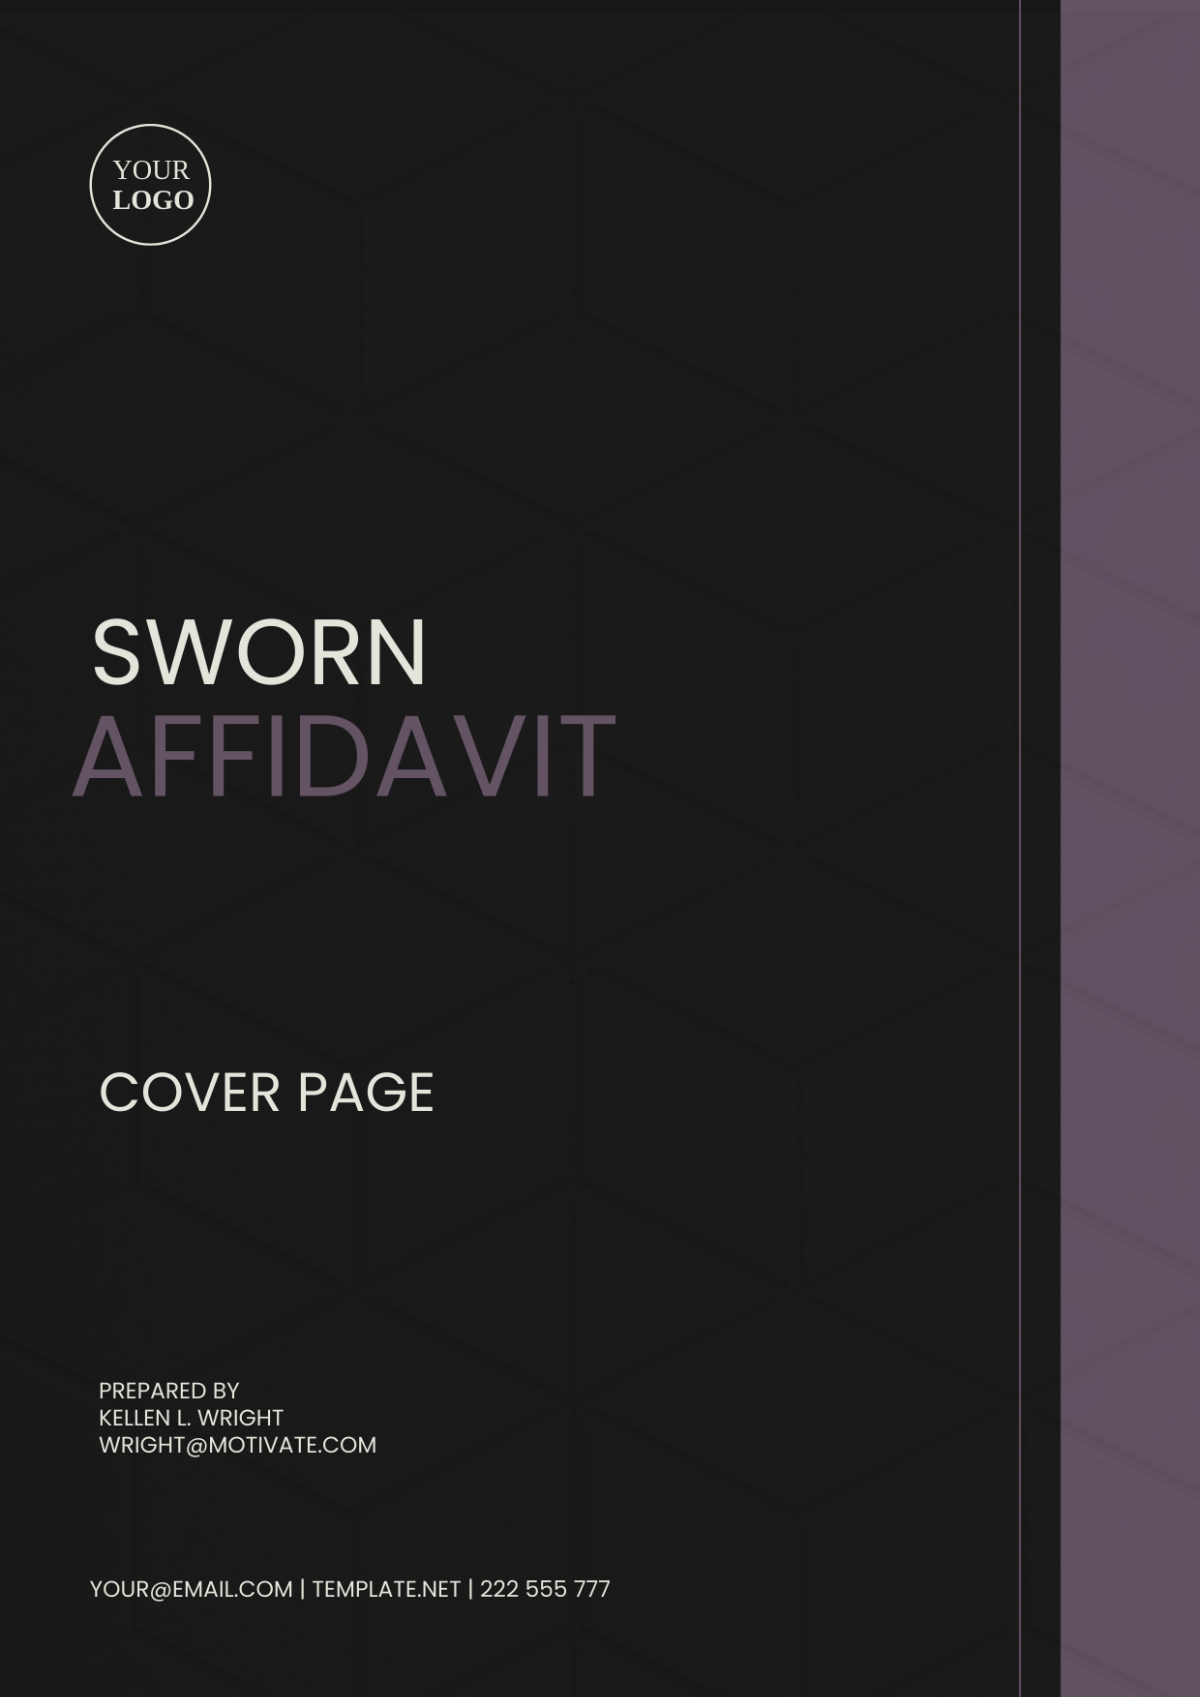 Sworn Affidavit Cover Page Template